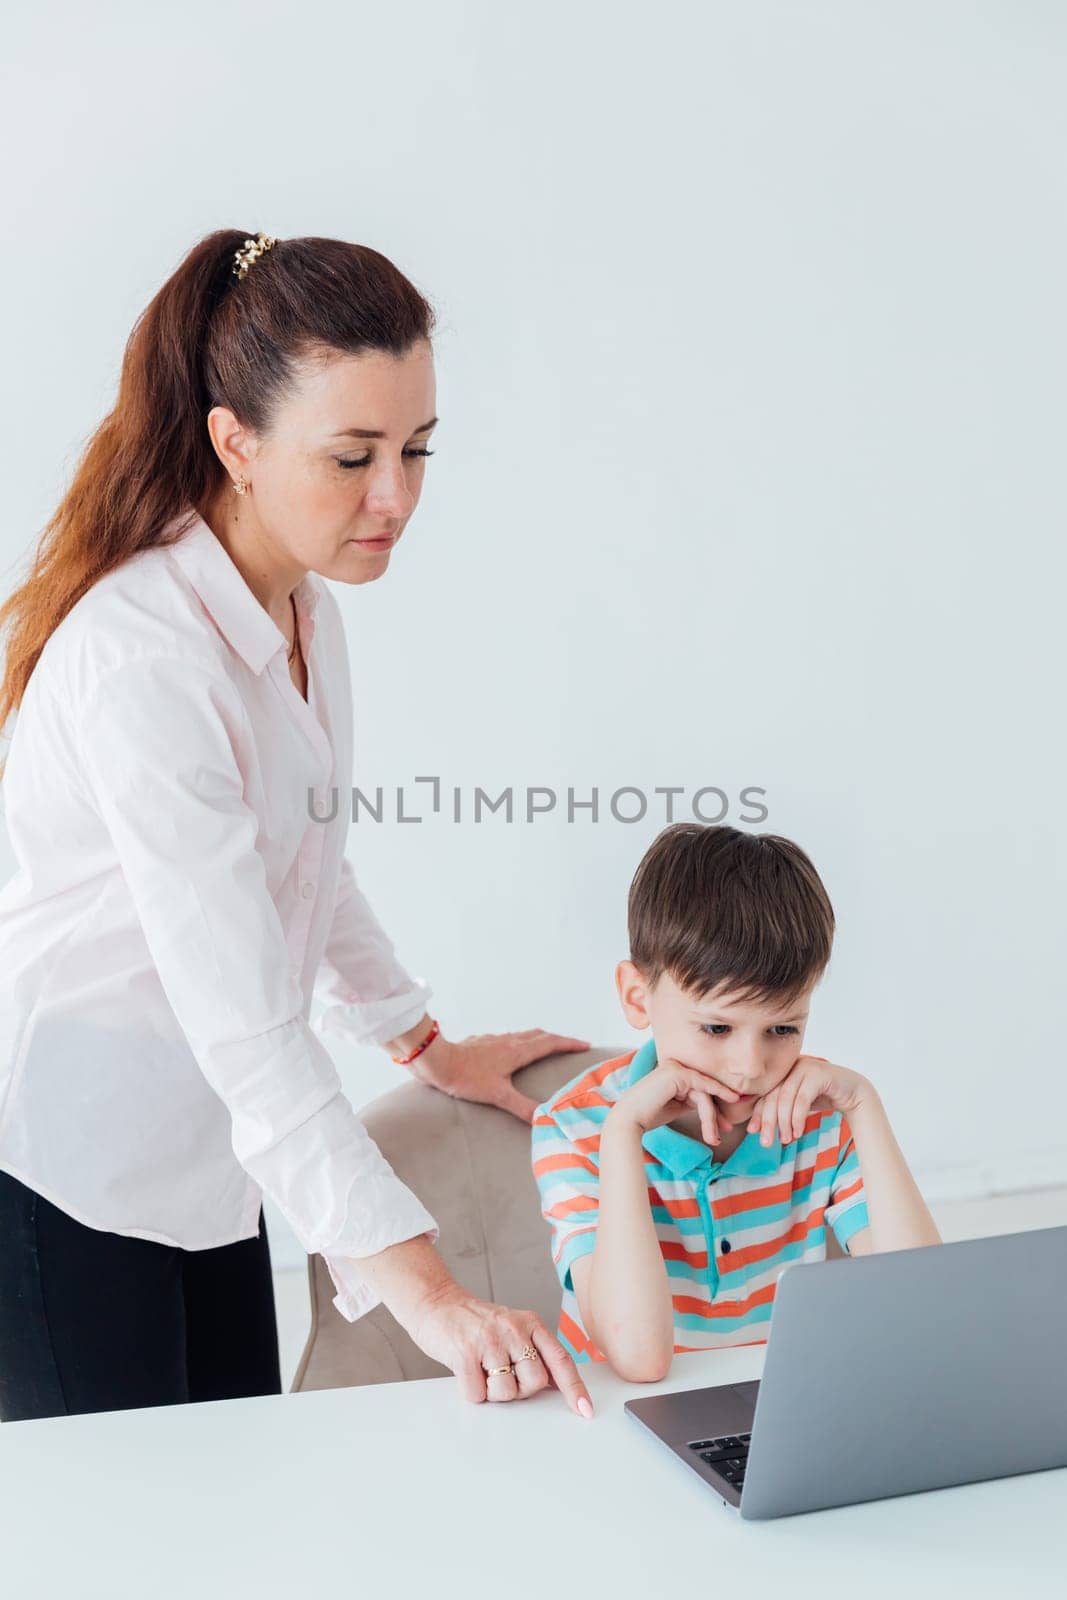 Female teaches boy to work on computer online